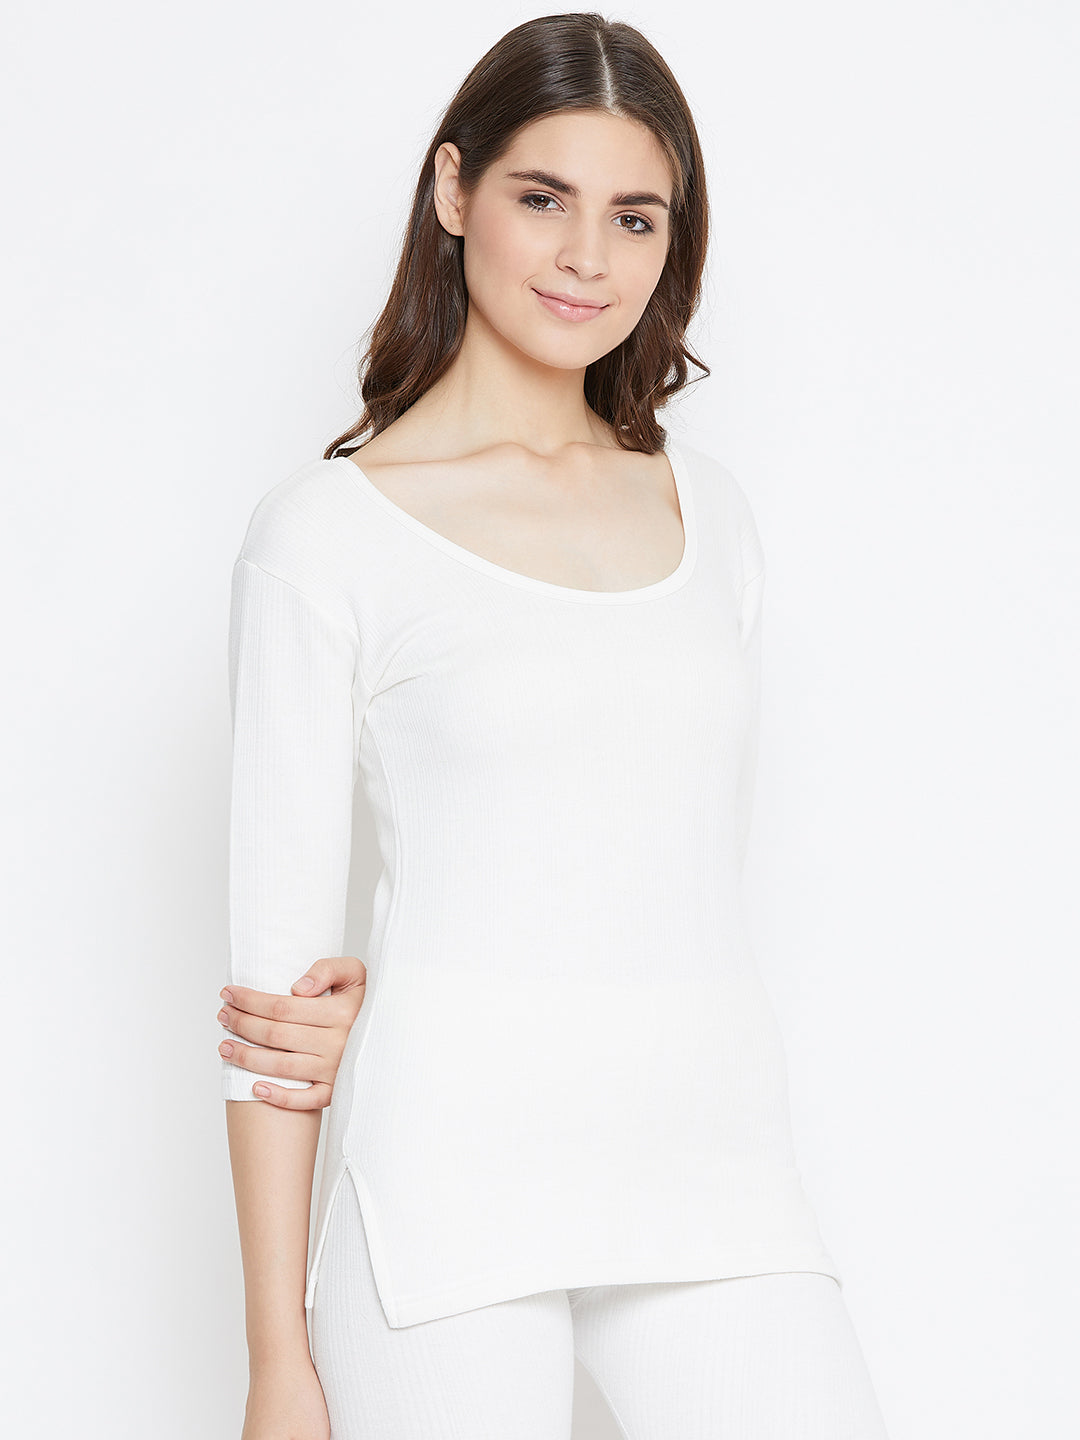 Zimfit Women's White Full Sleeves Thermal Top whitemoon.in